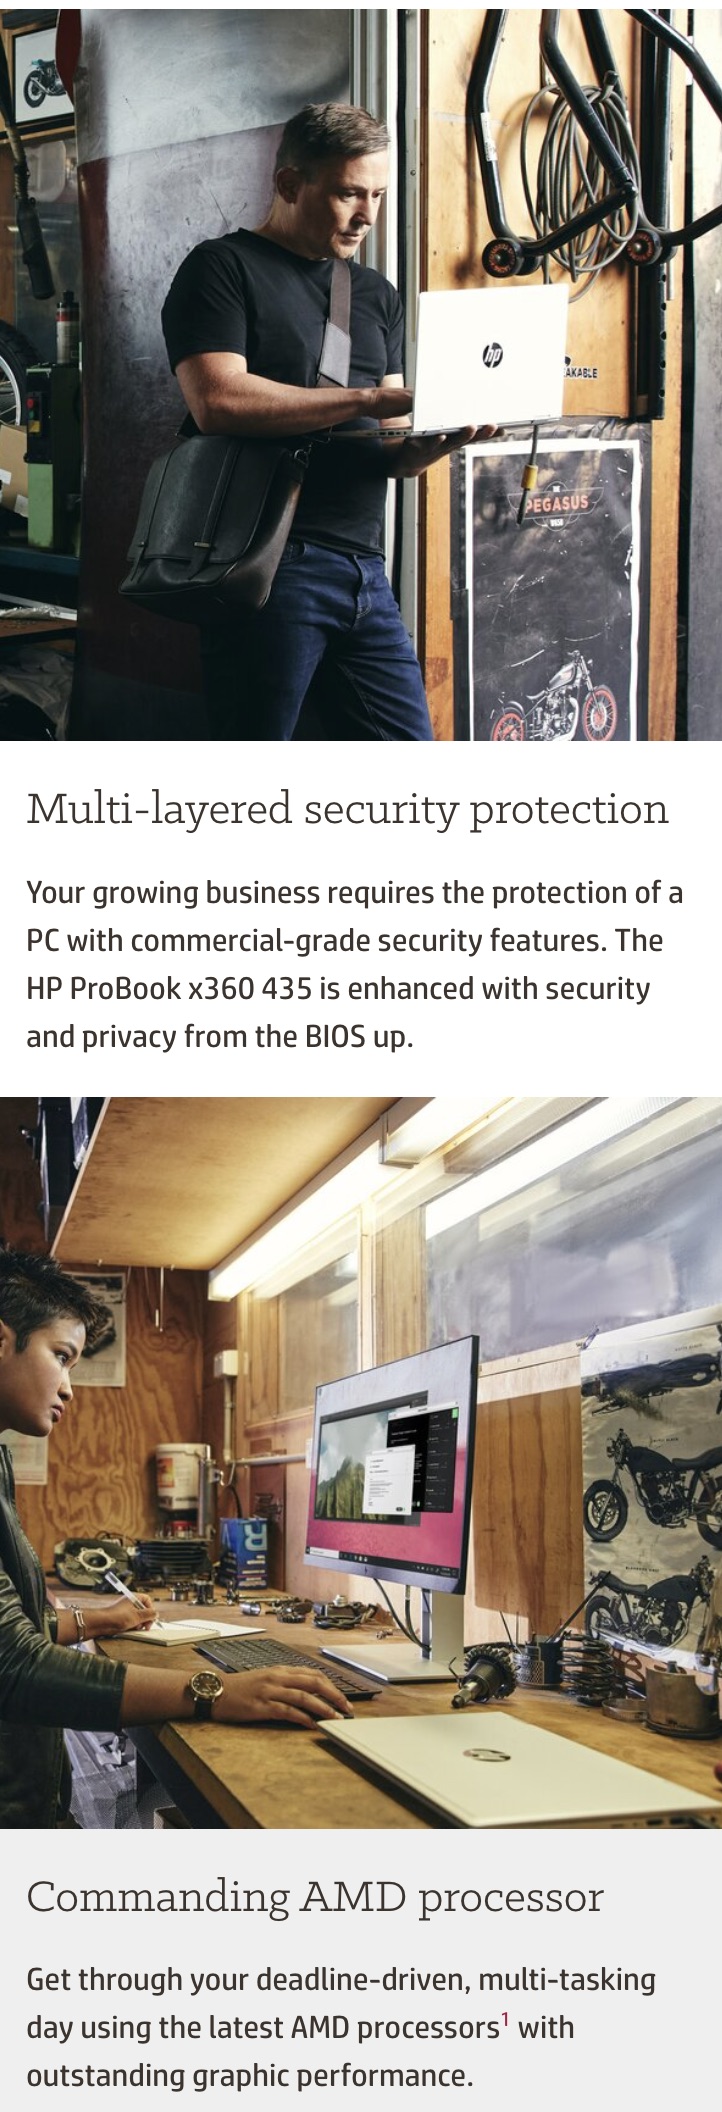 HP-ProBook-X360-435-G8-2-in-1-Touchscreen-Laptop-Description-2